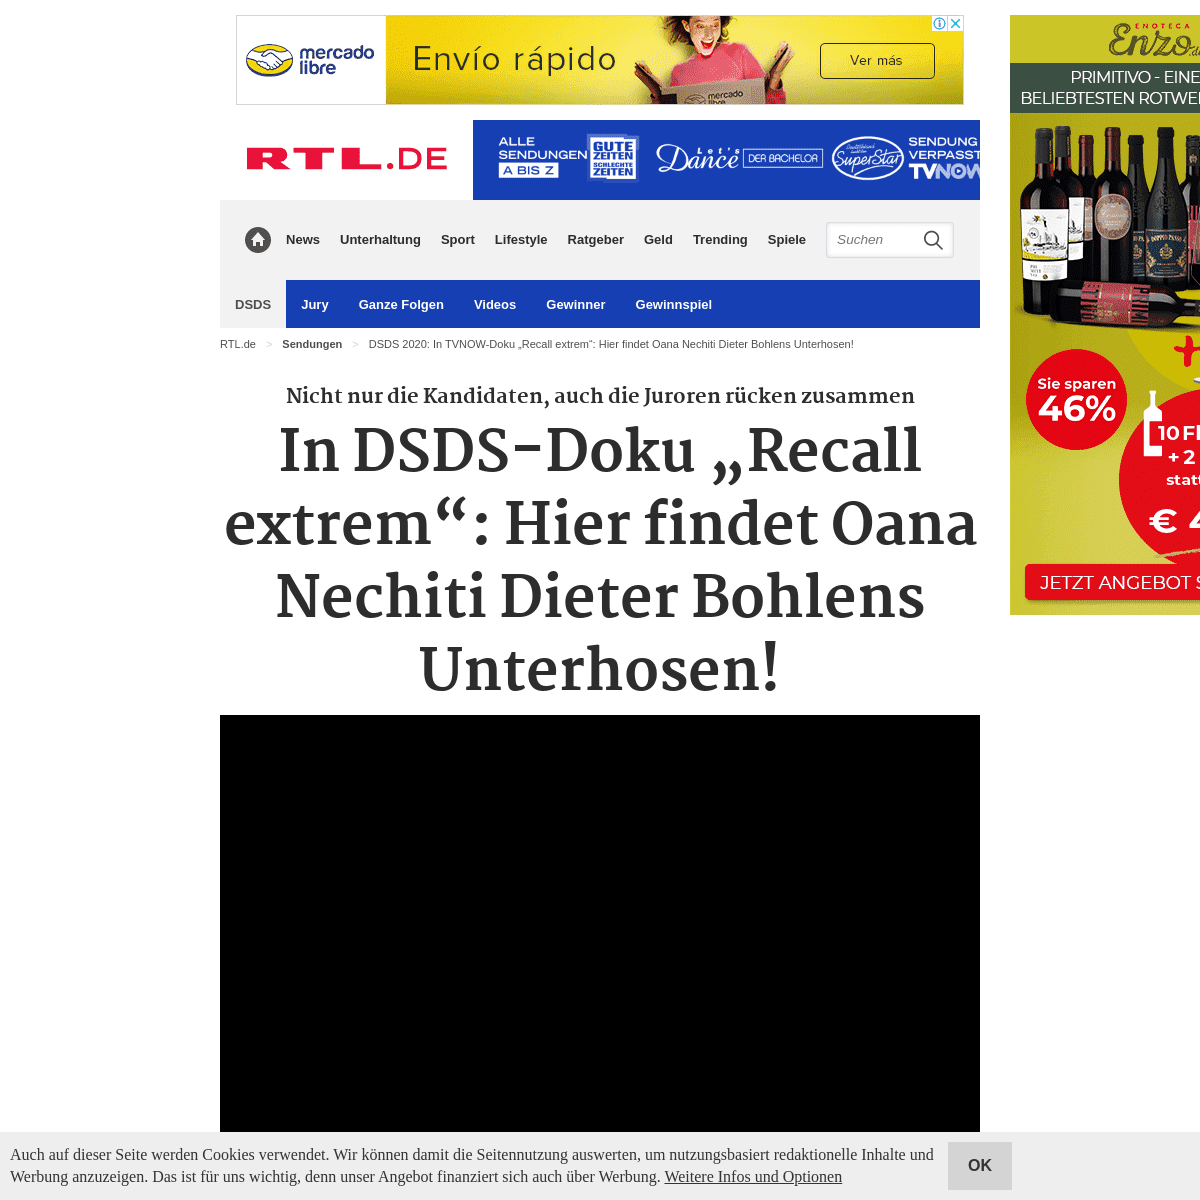 A complete backup of www.rtl.de/cms/dsds-2020-in-tvnow-doku-recall-extrem-hier-findet-oana-nechiti-dieter-bohlens-unterhosen-448